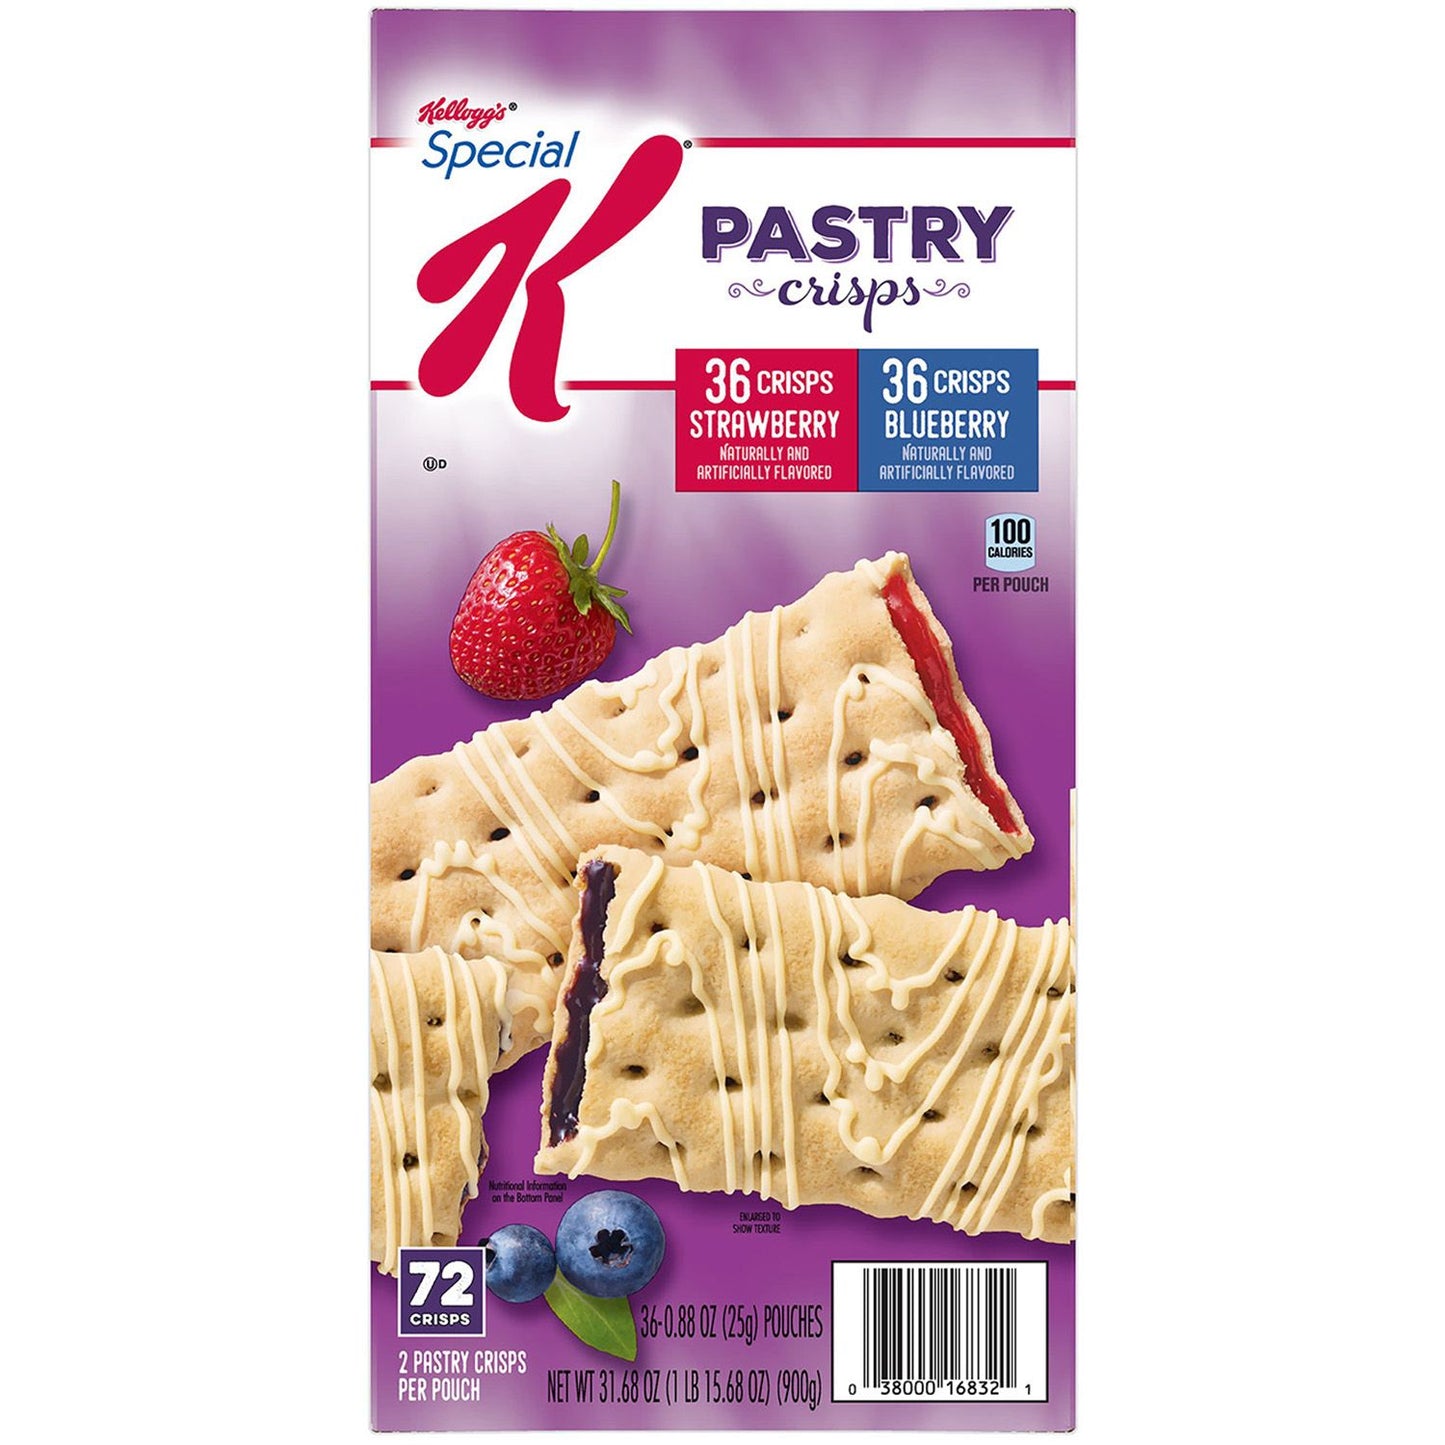 Special K Pastry Crisps Variety Pack (0.44 oz., 60 pk.)